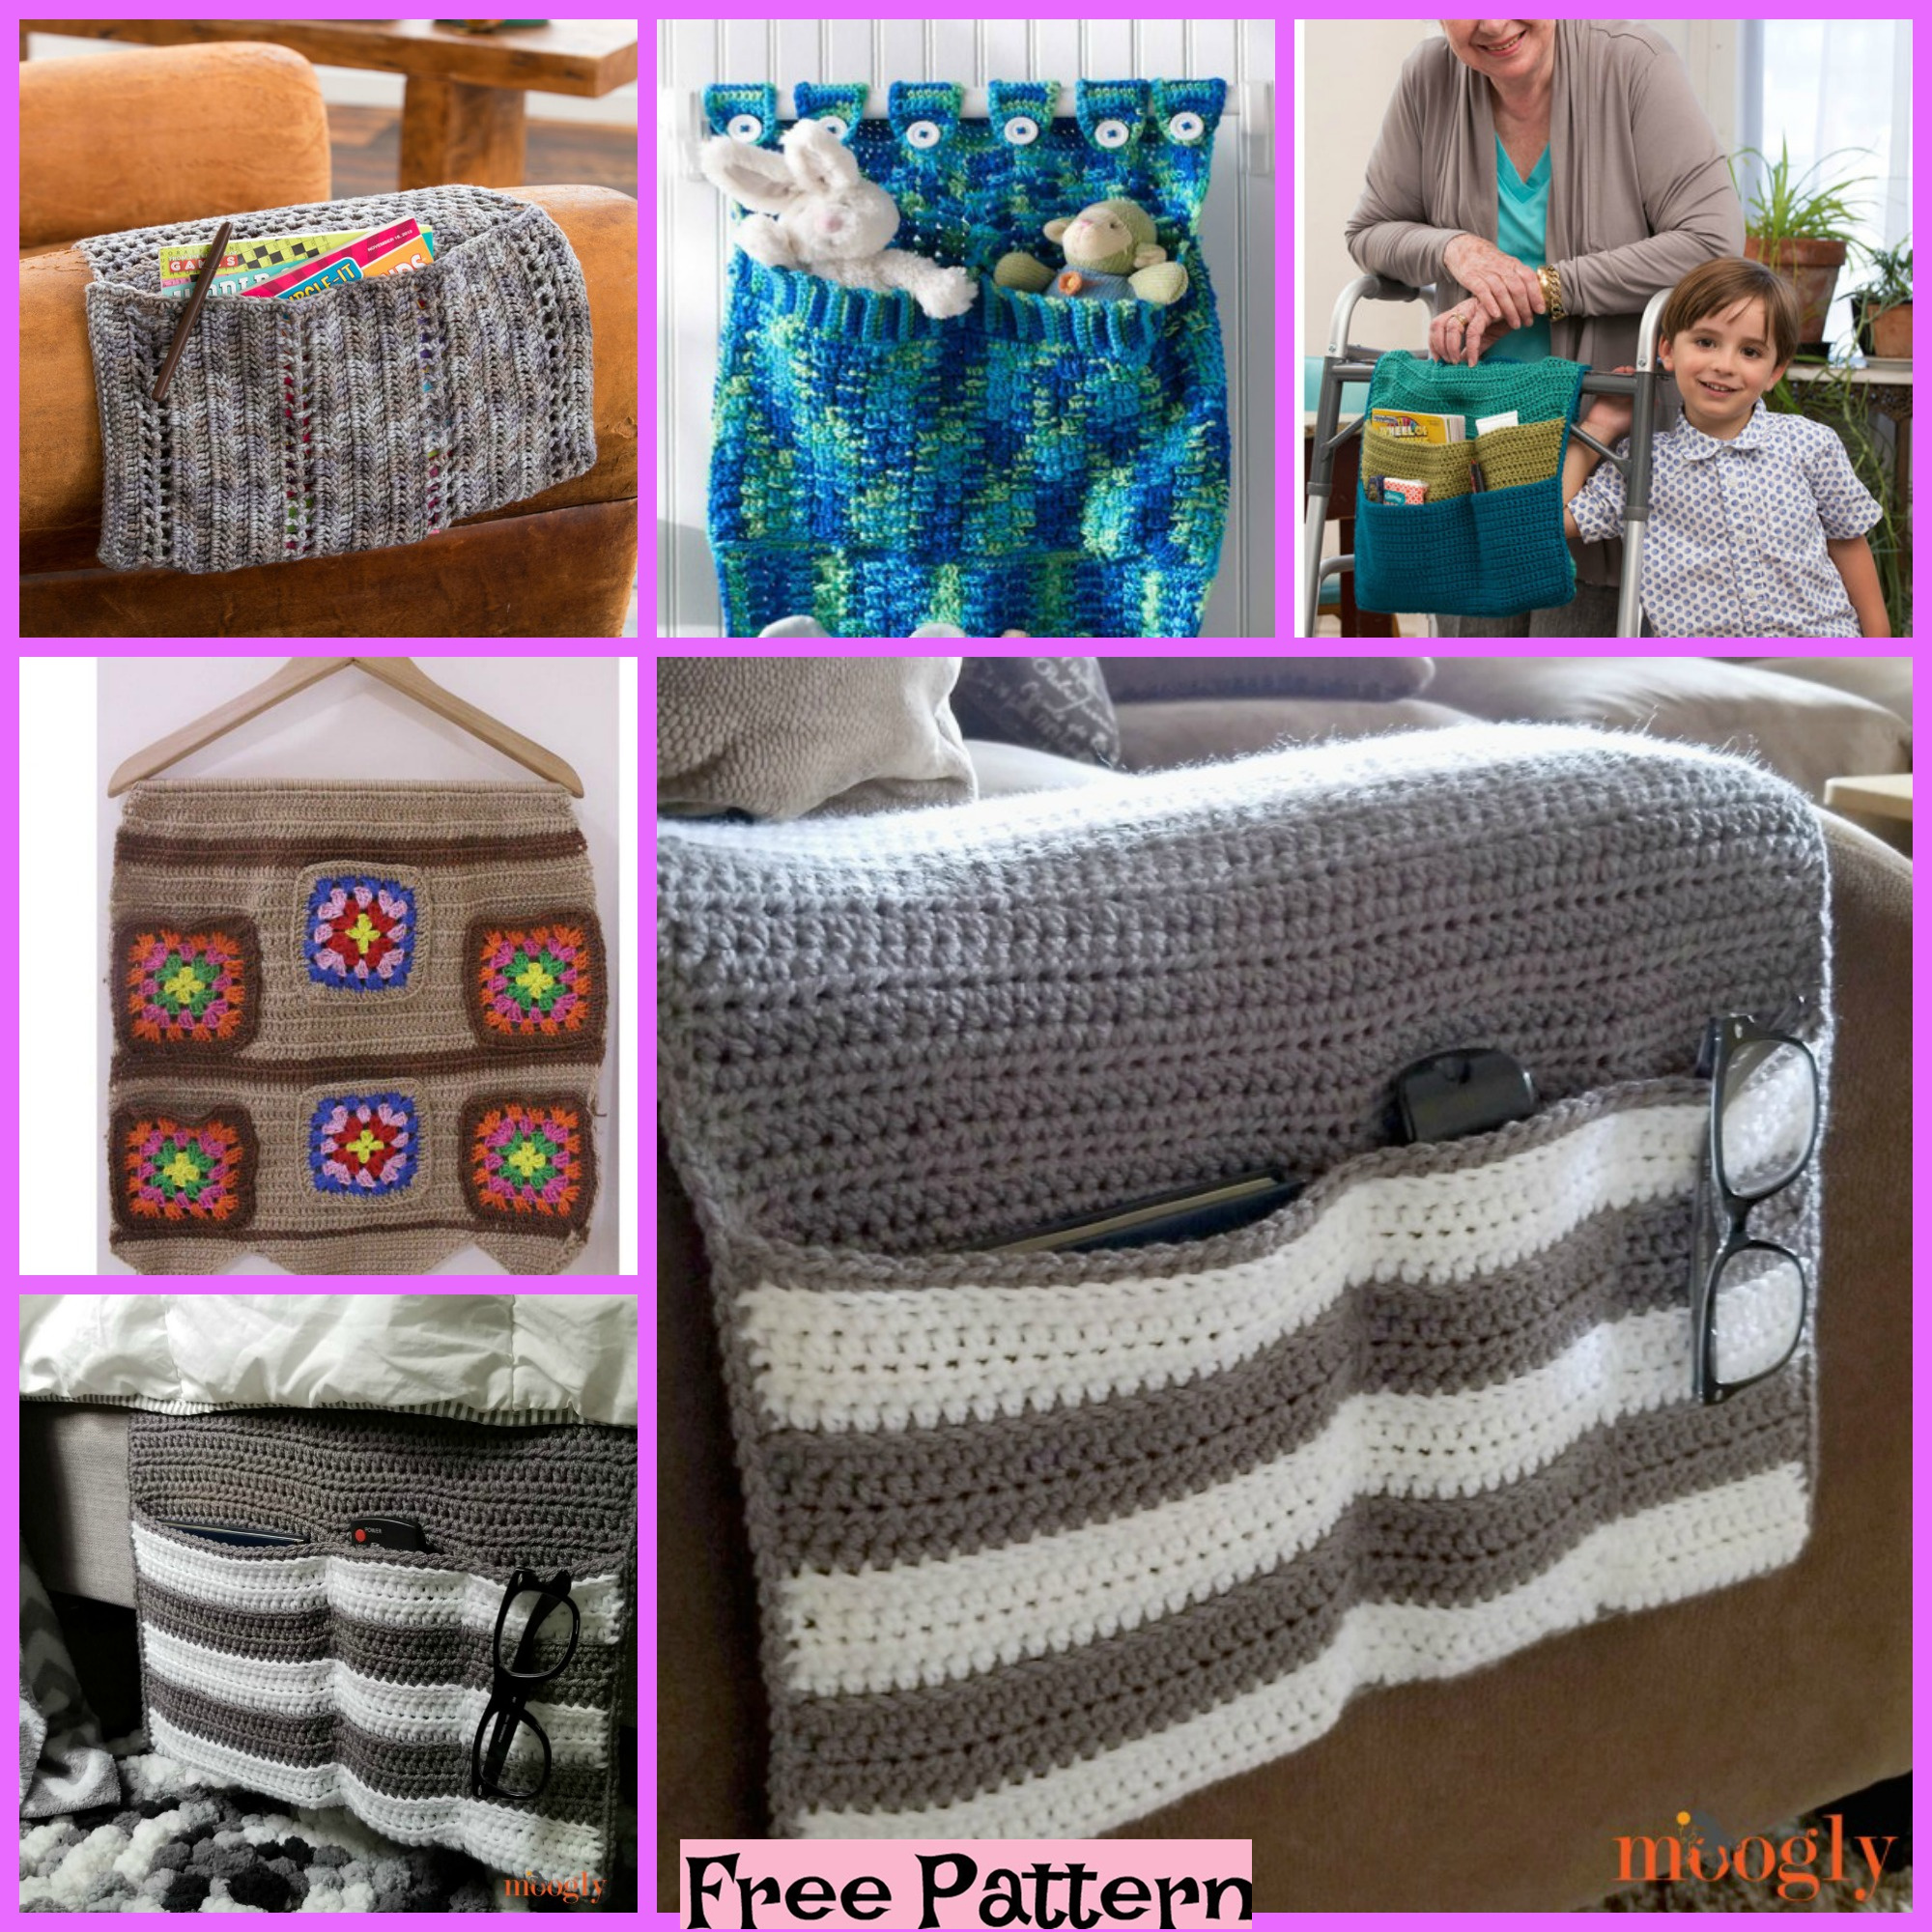 diy4ever- Crochet Home Organizers - Free Patterns